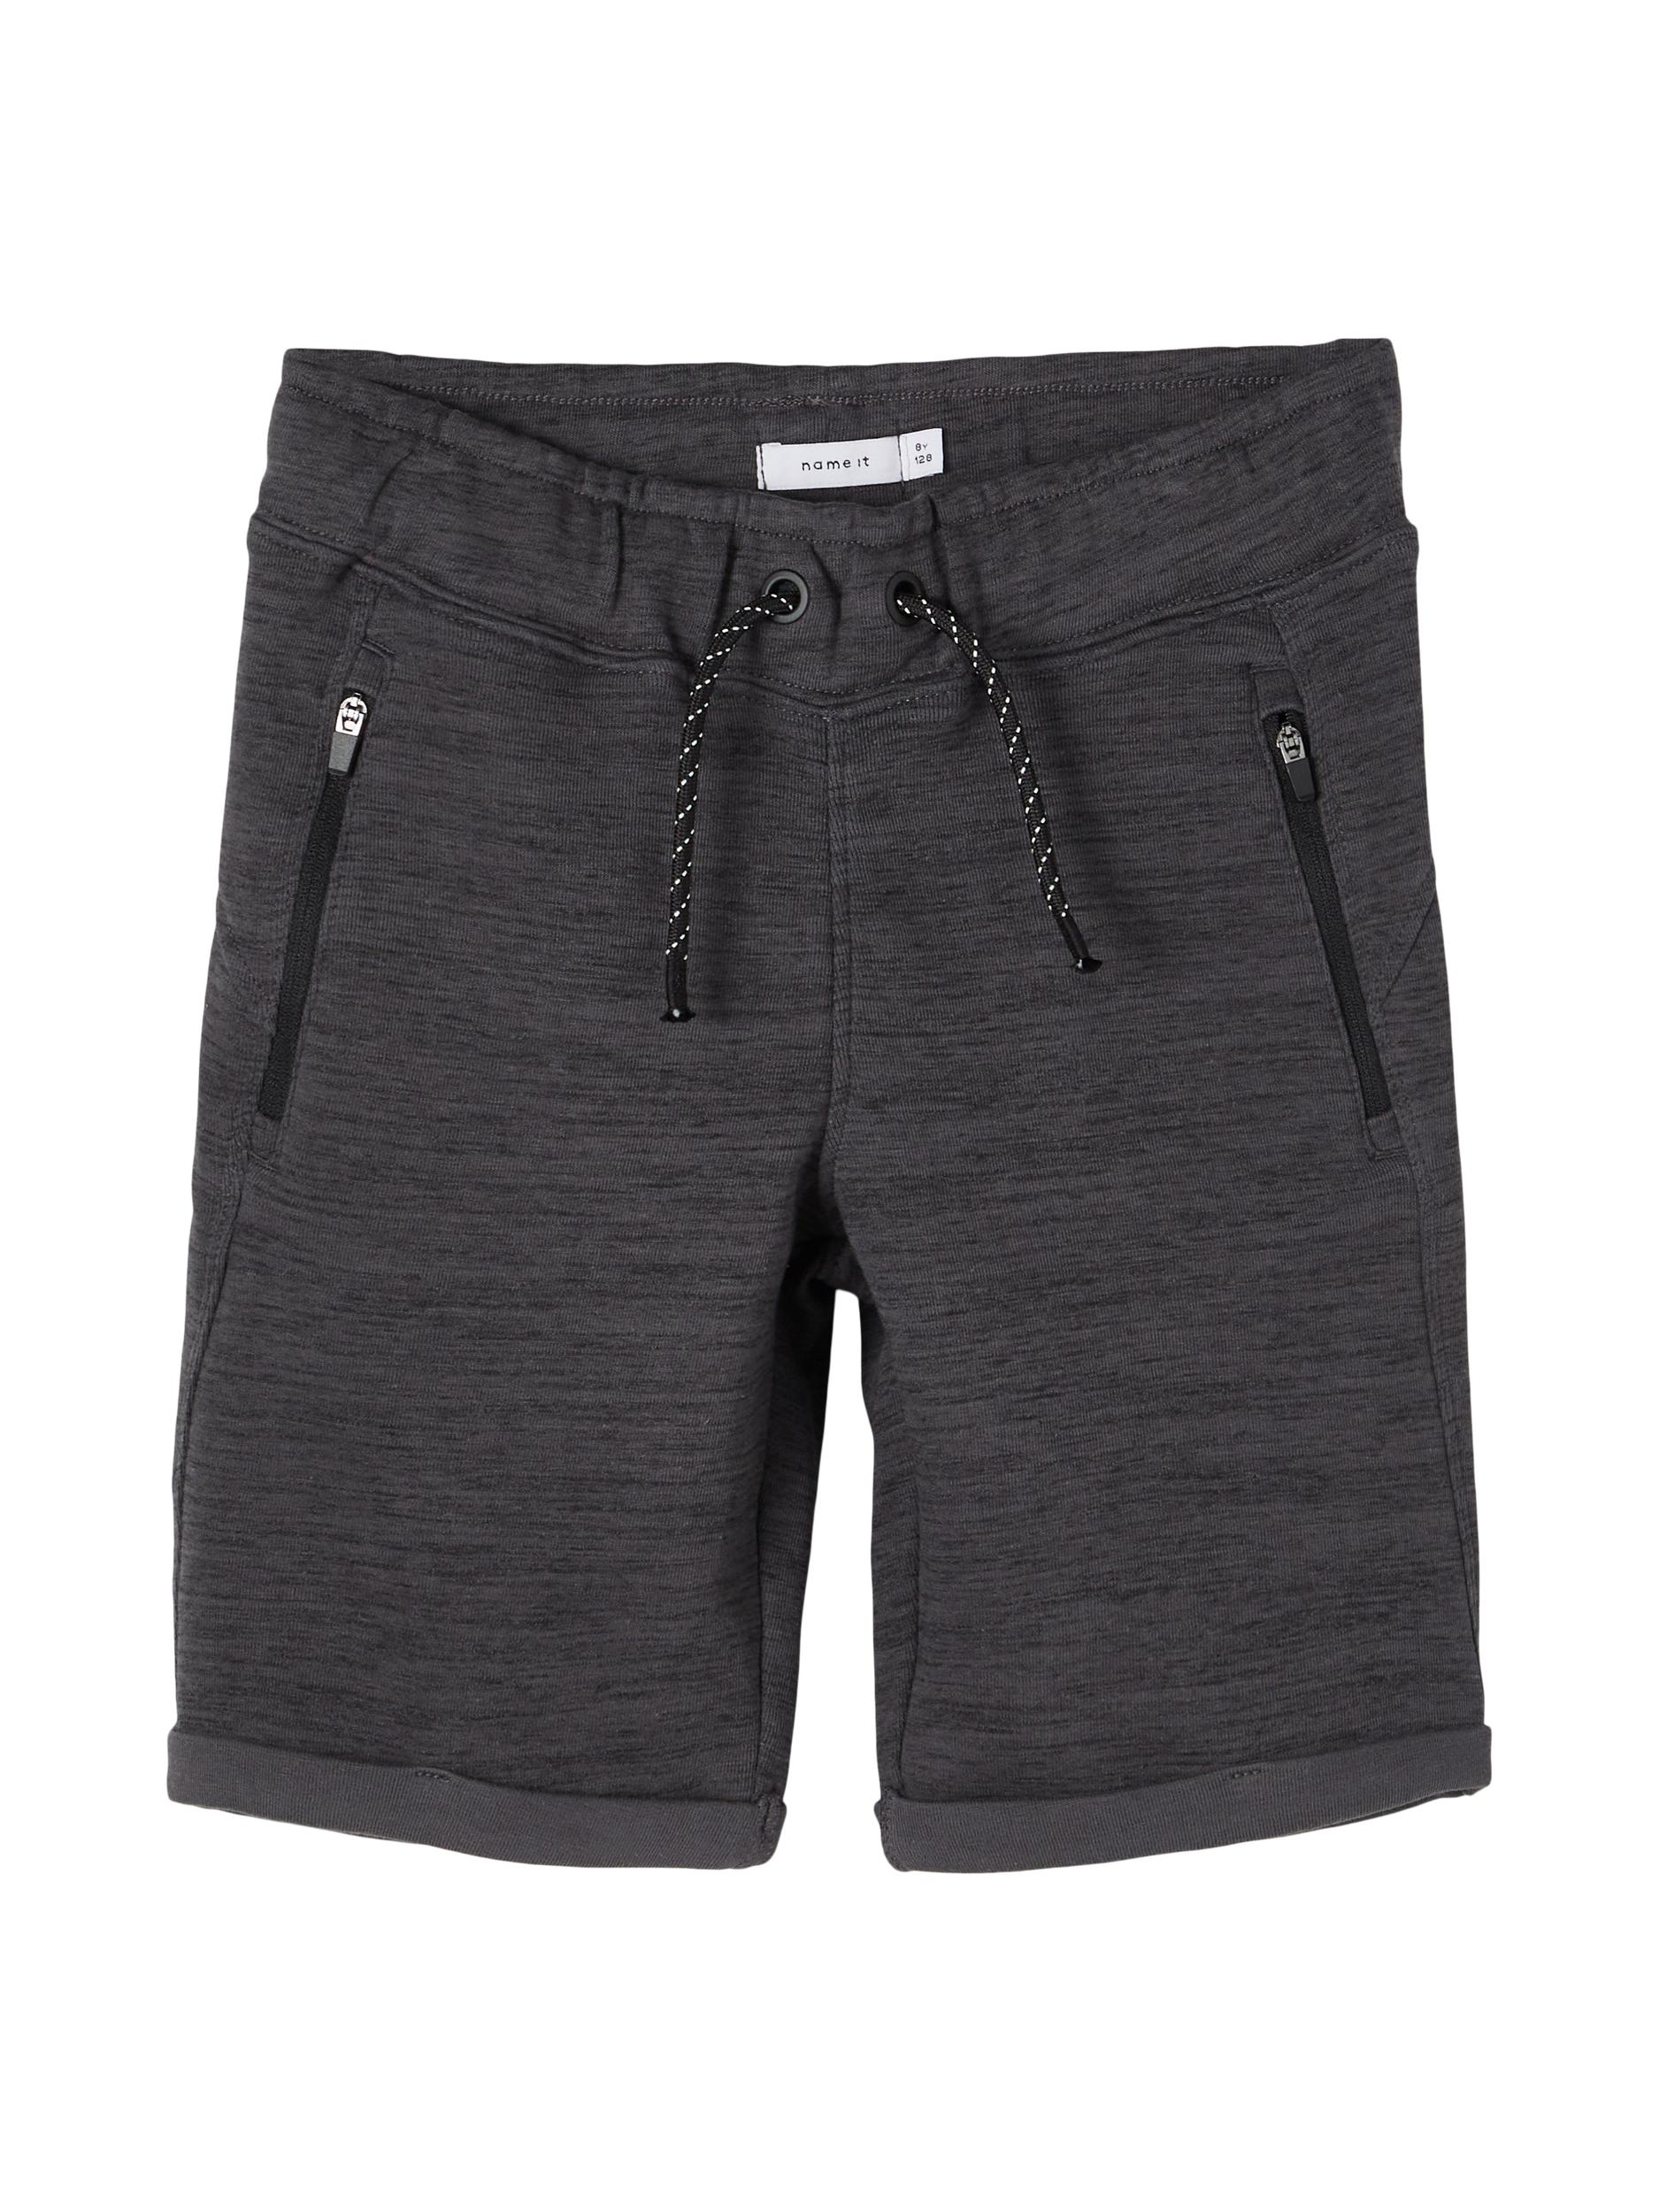 Scottt Sweat Shorts, Asphalt, 134 cm